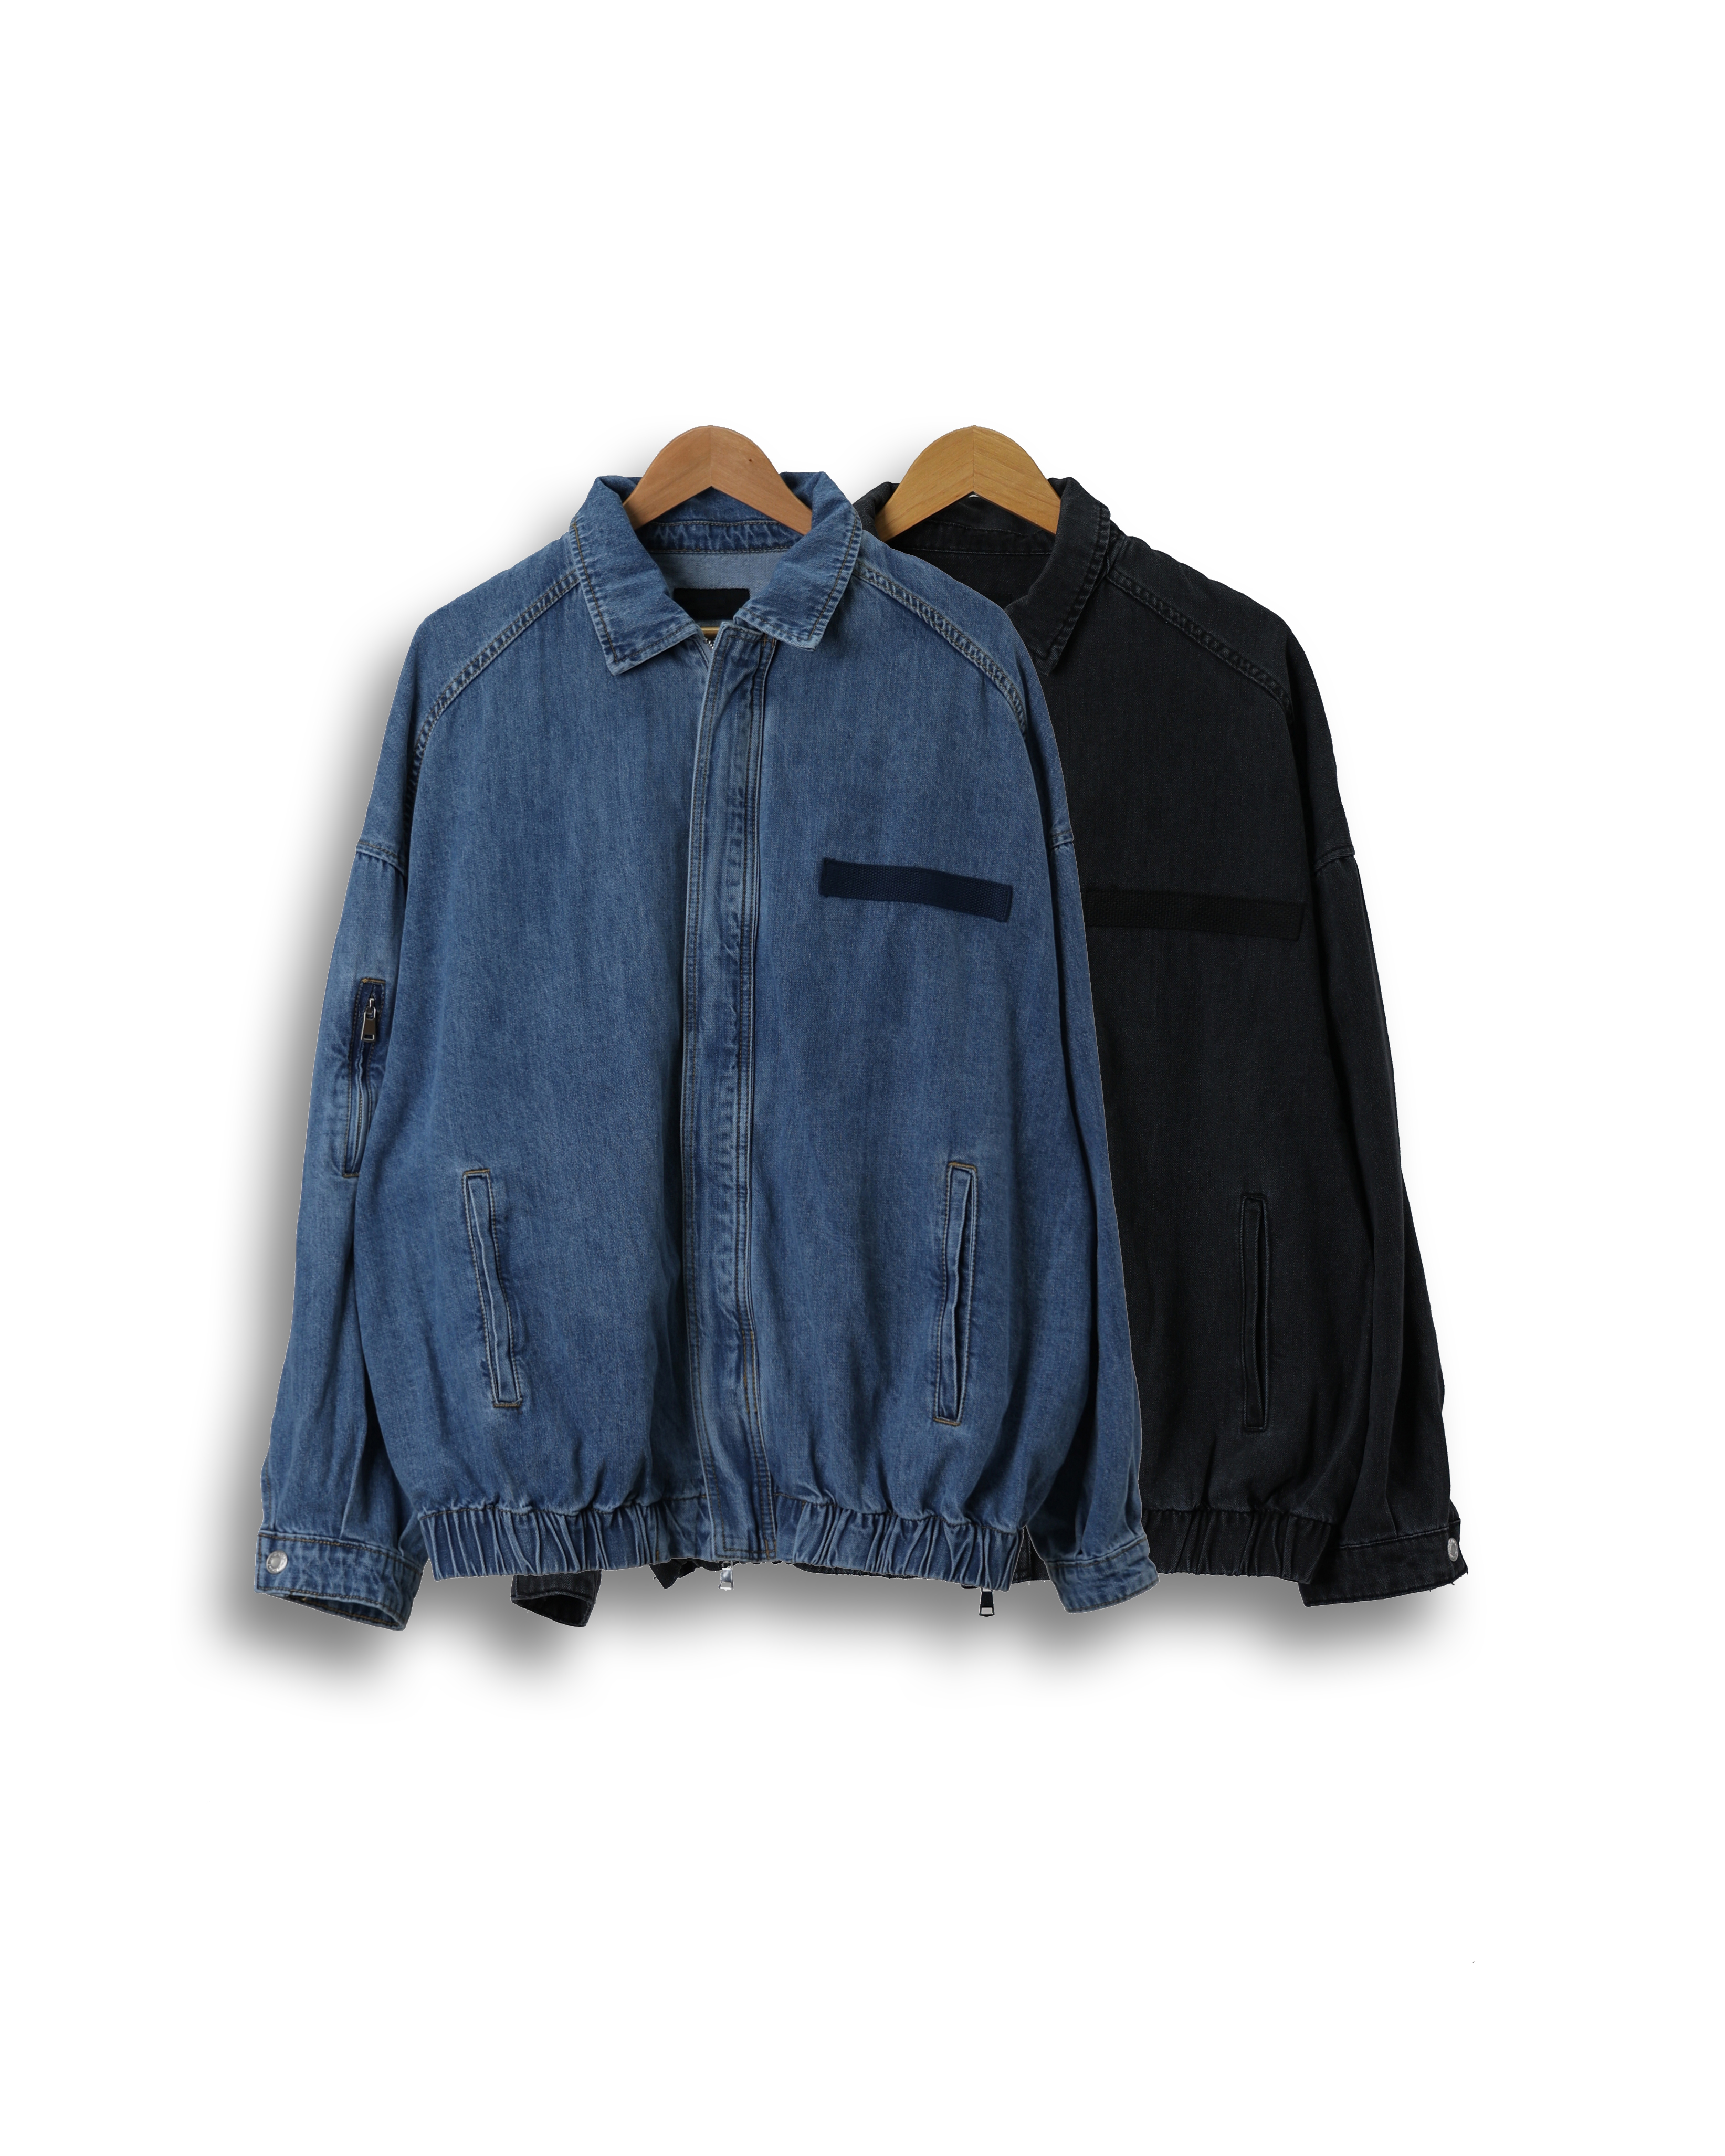 RPEN R203-4 Vintage Denim Zip Jacket (Black Denim/Blue Denim)